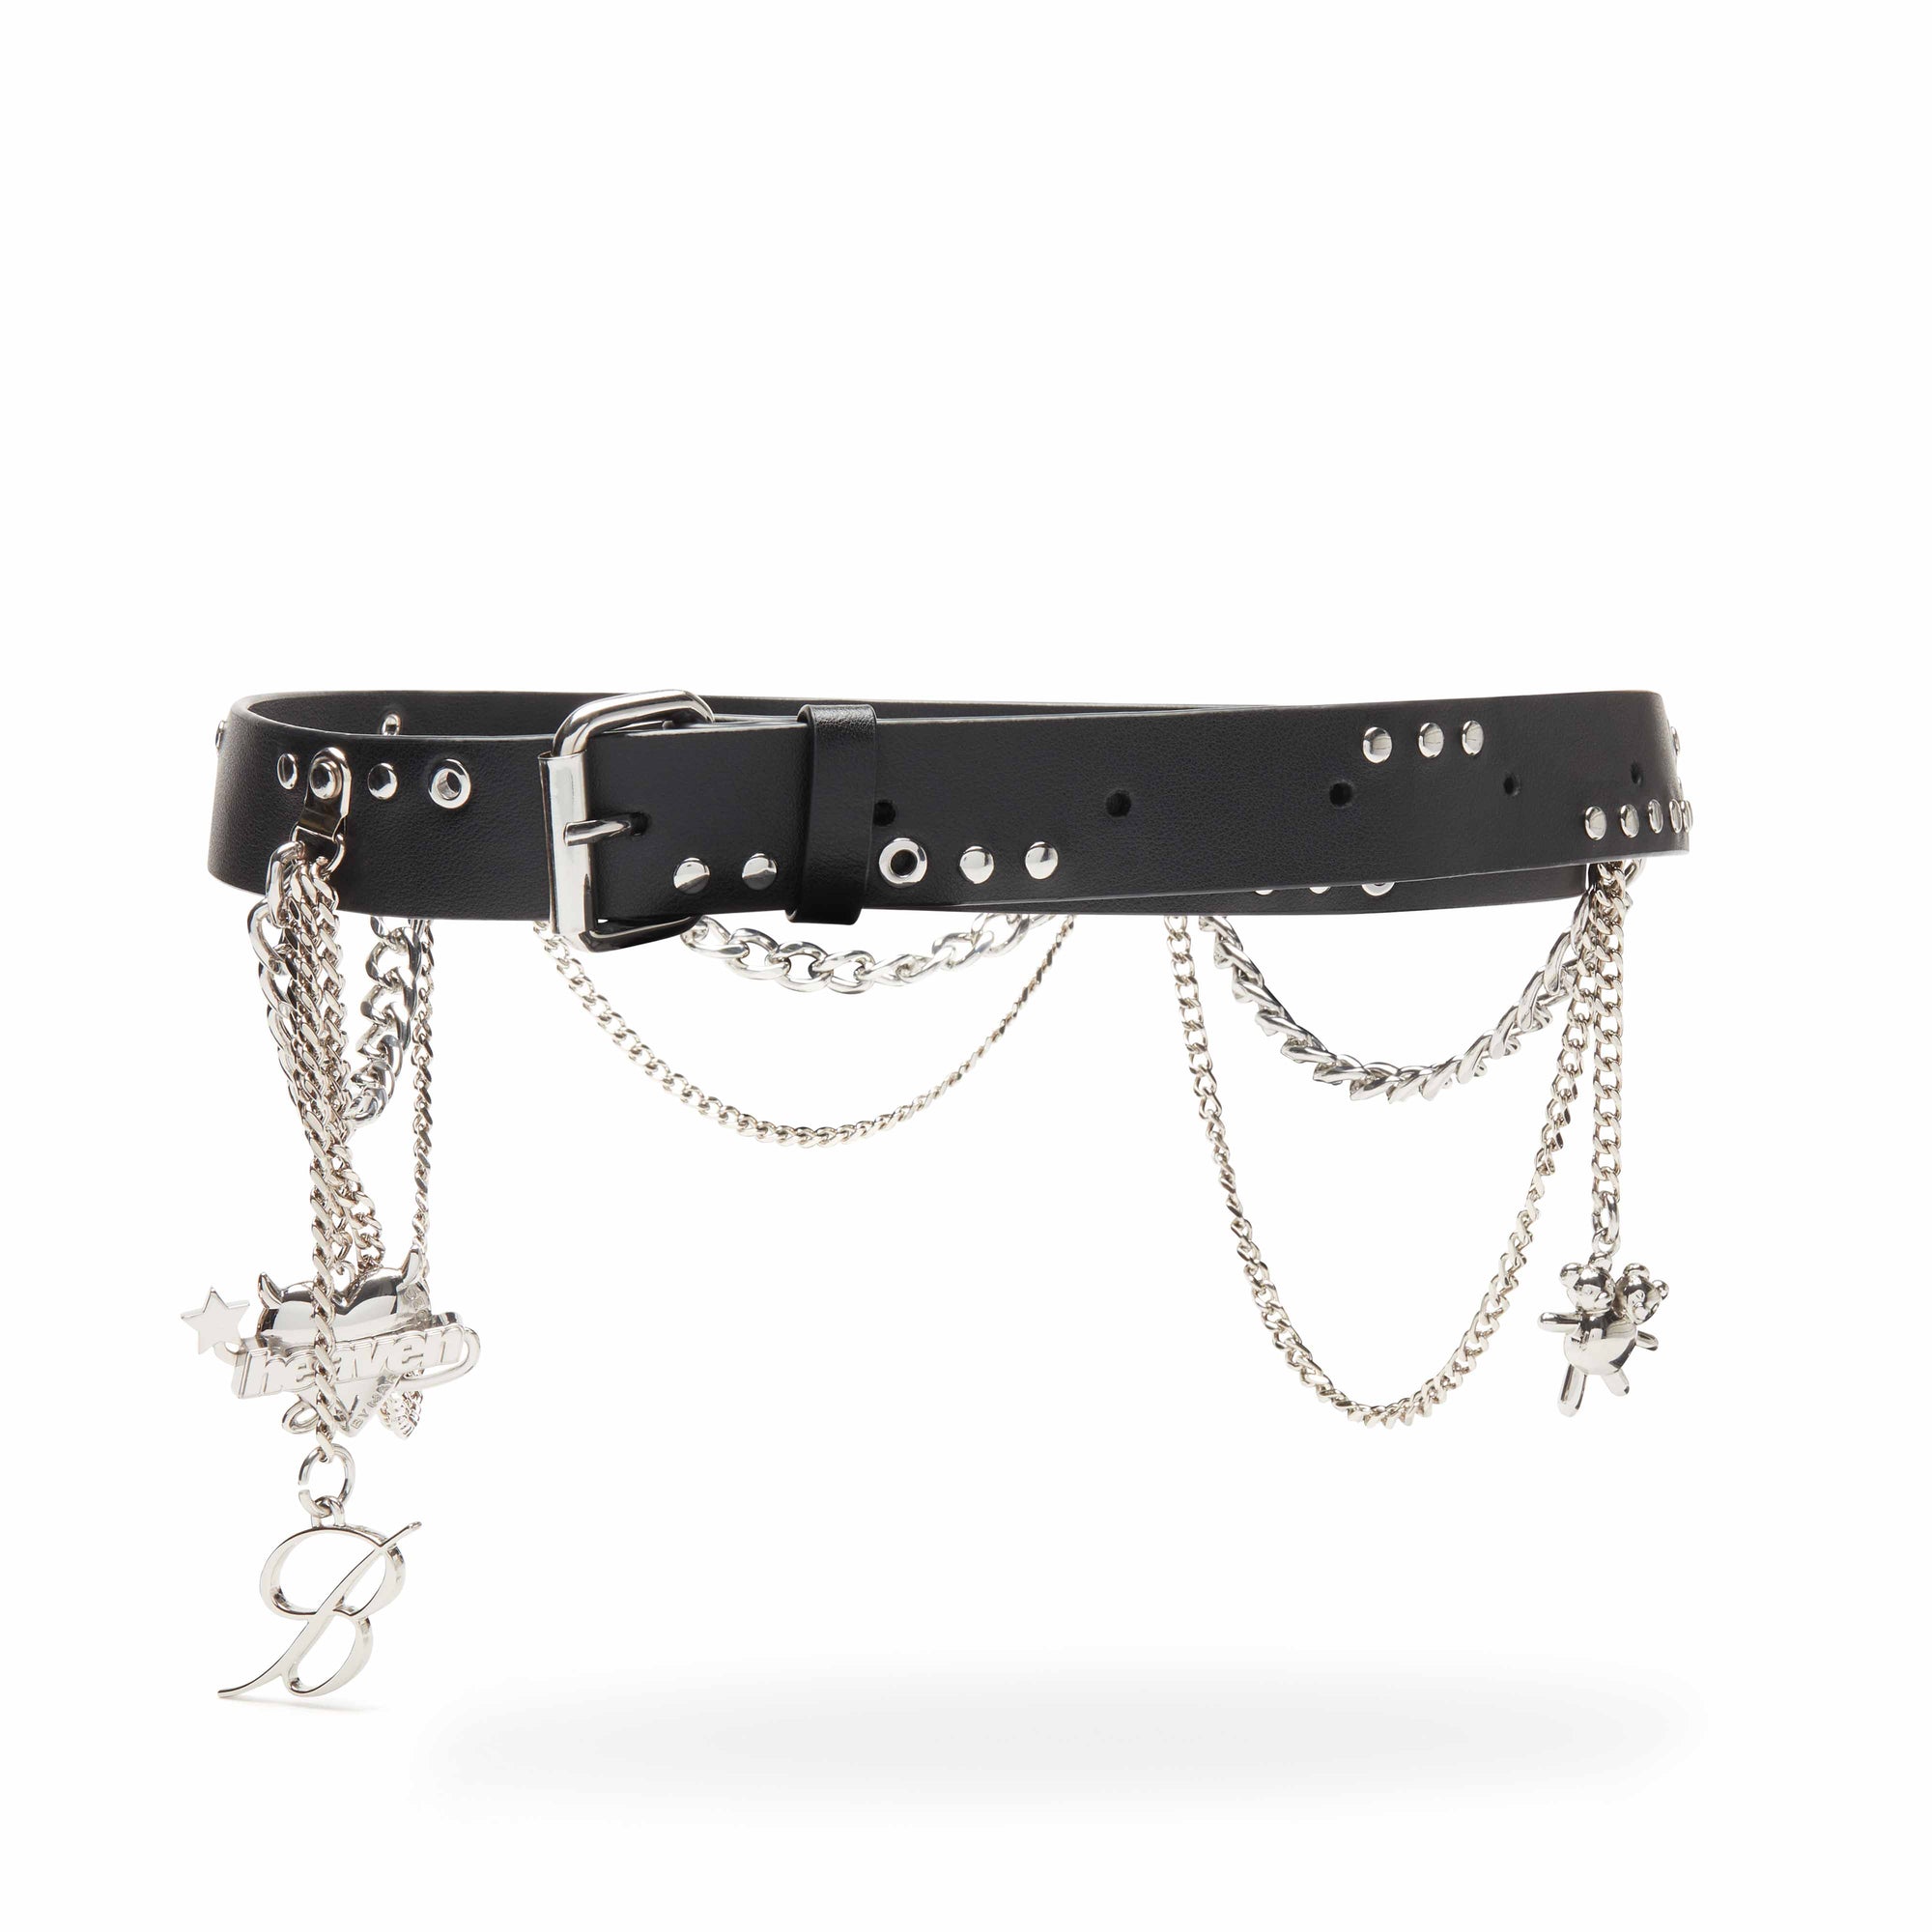 Blumarine by Marc Jacobs - Women’s Blumarine Chain Belt - (Black/Silver) view 1